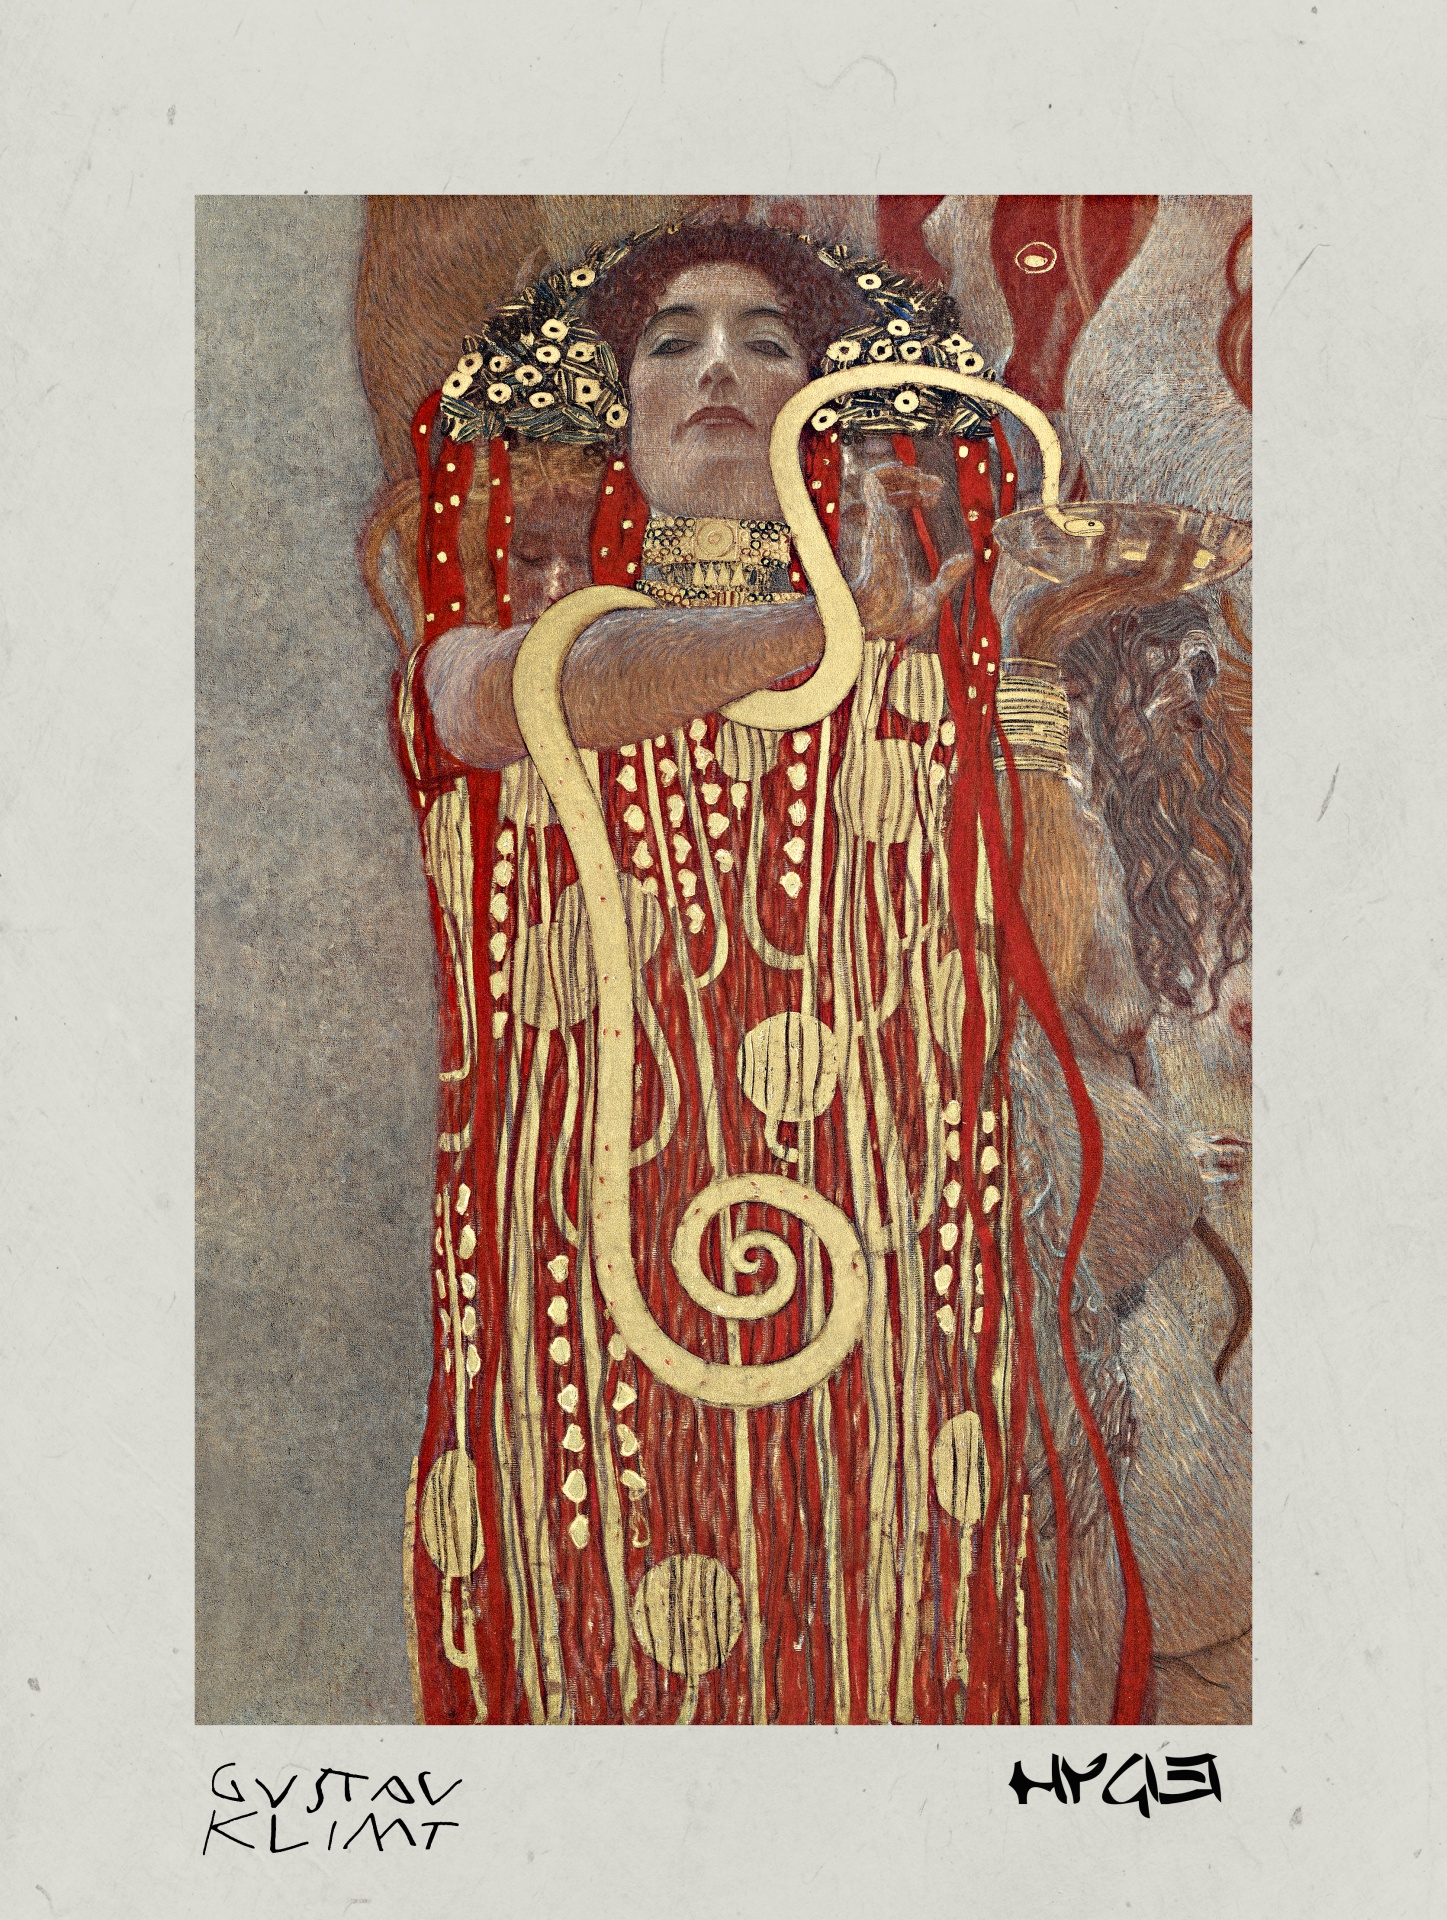 Gustav Klimt's Hygieia 1907 famous painting. Original from Wikimedia Commons.